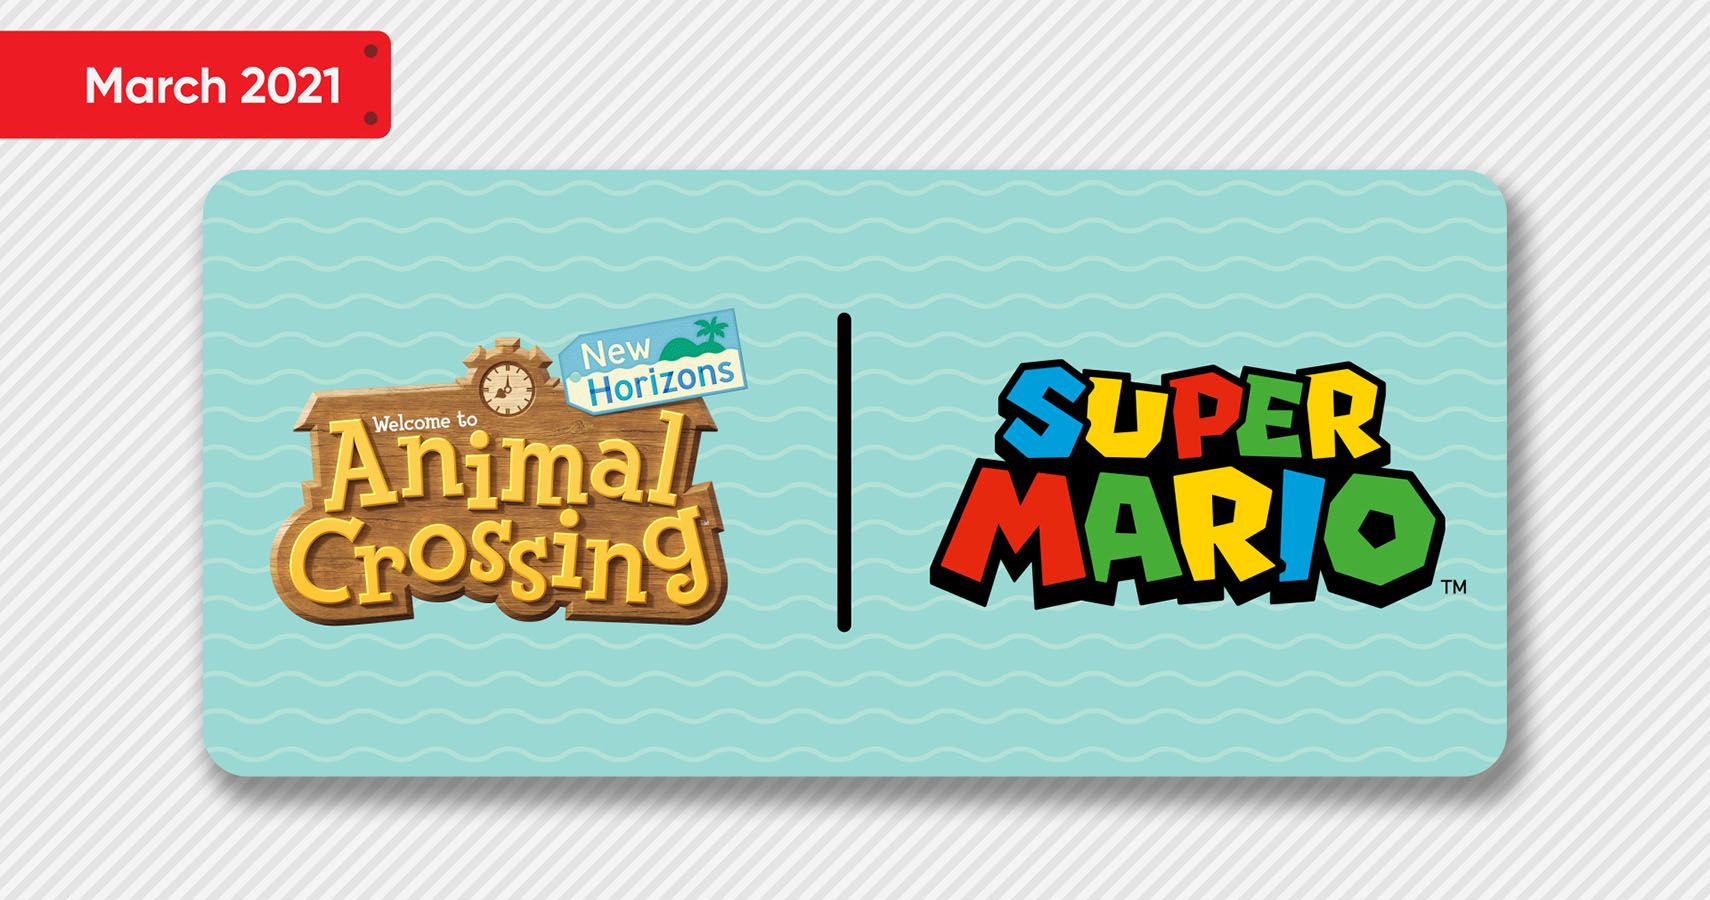 Super Mario and Animal Crossing